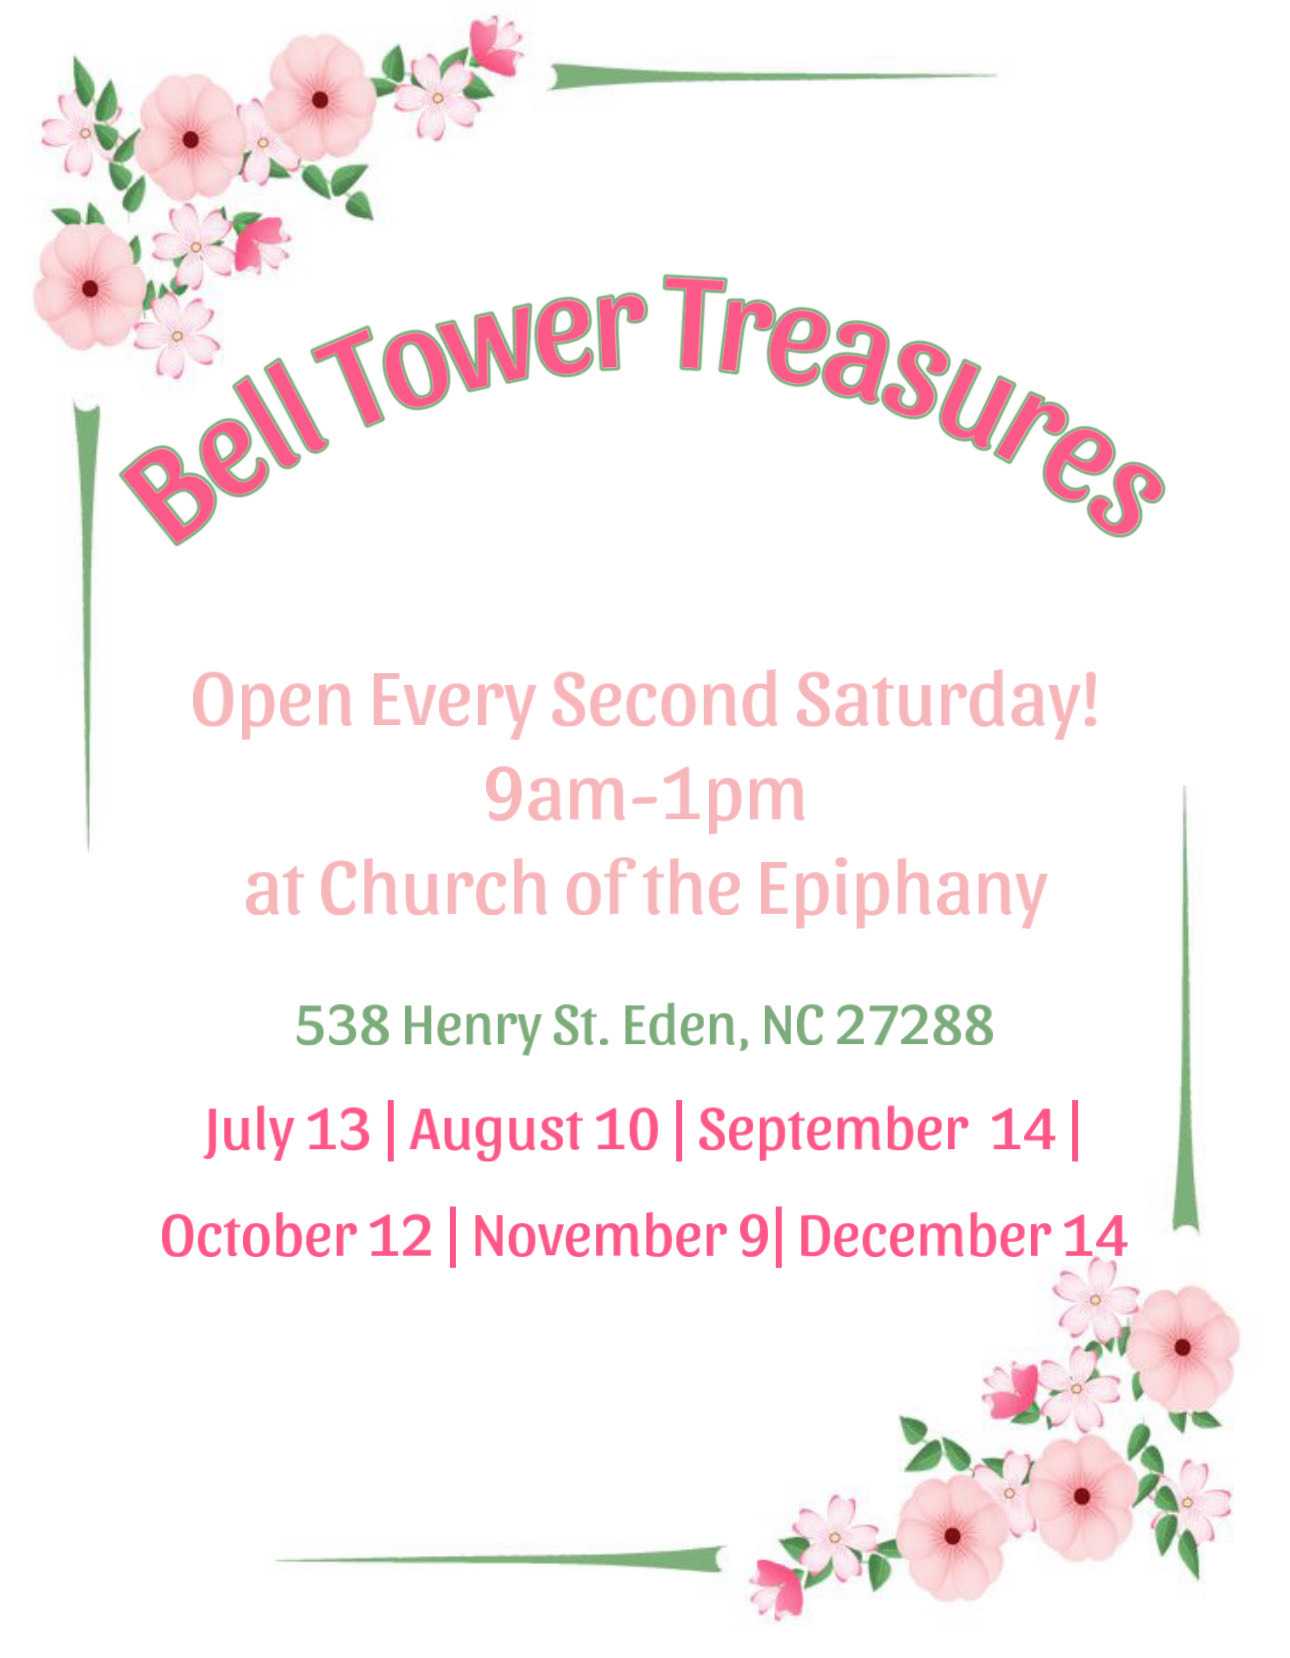 Bell Tower Treasures